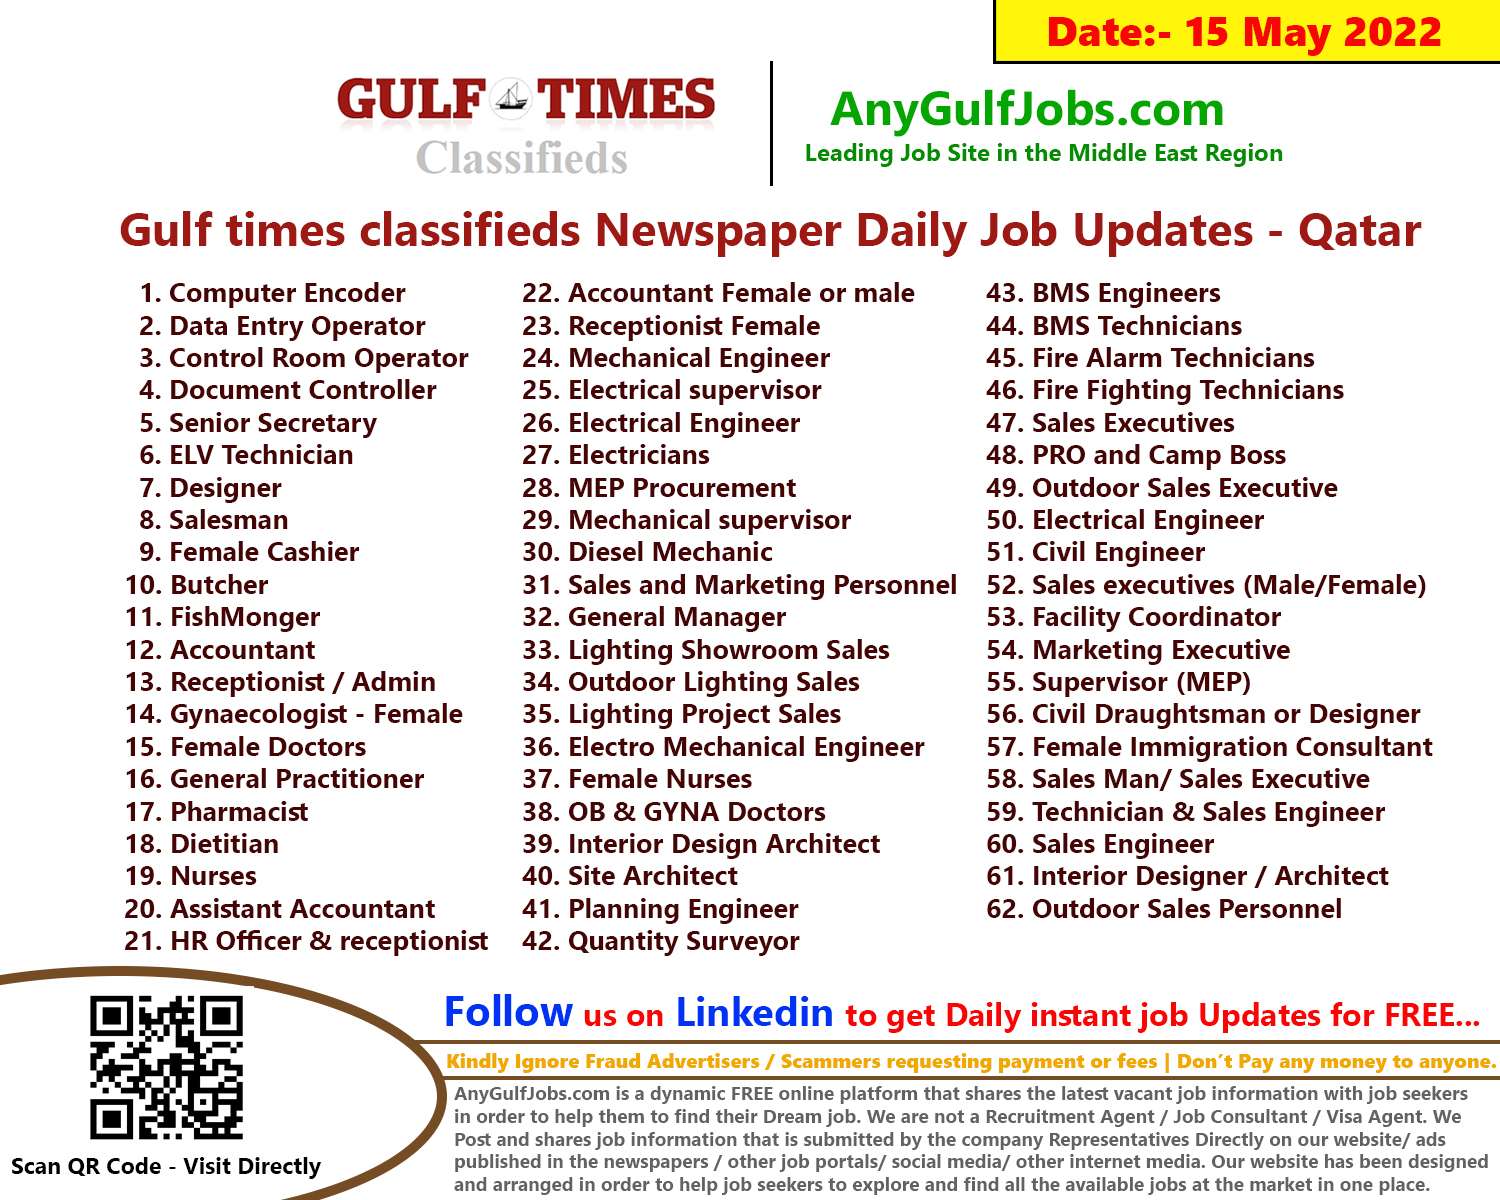 Gulf times classifieds Job Vacancies Qatar - 15 May 2022